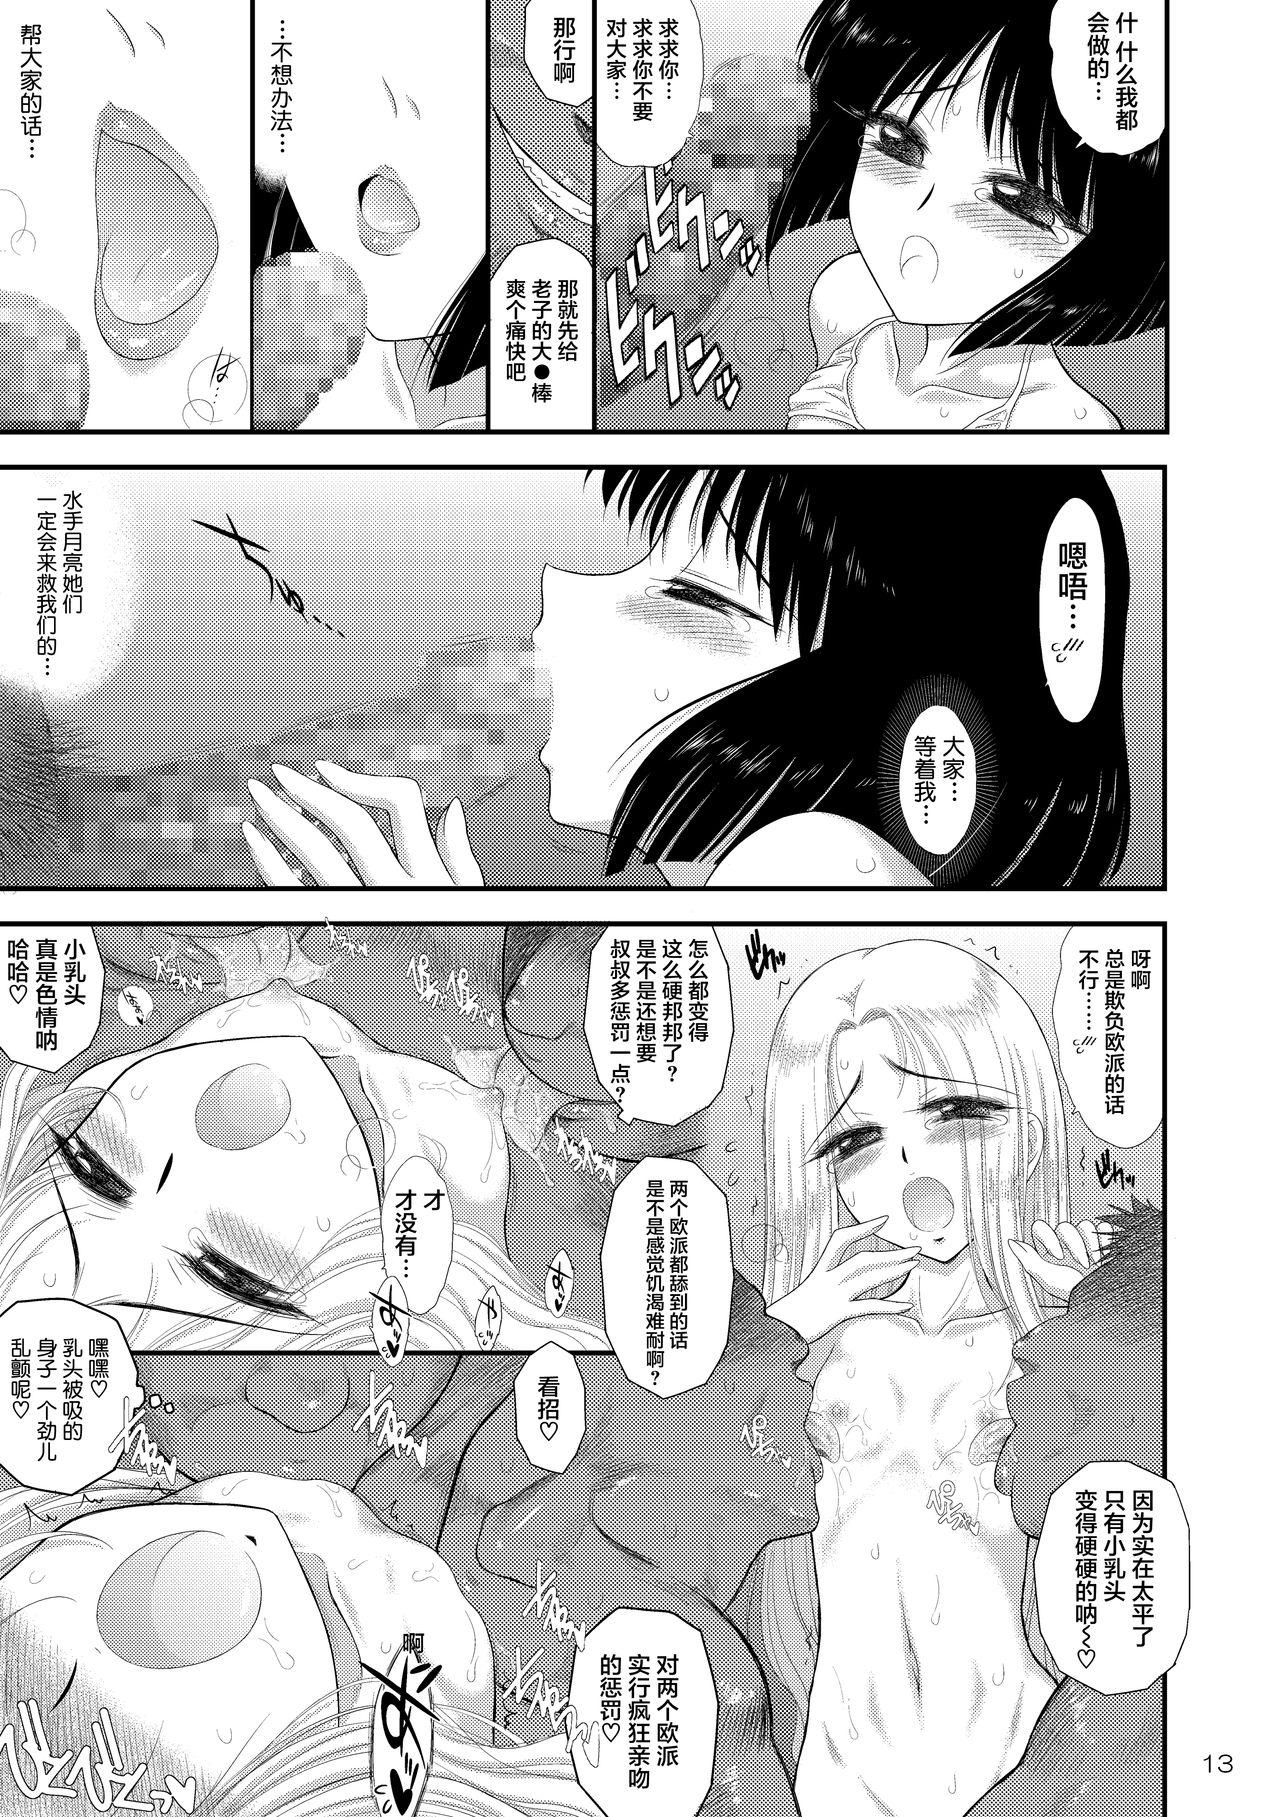 Mistress Doyoubi no Joshi wa Gaman Dekinai - Sailor moon Amante - Page 13